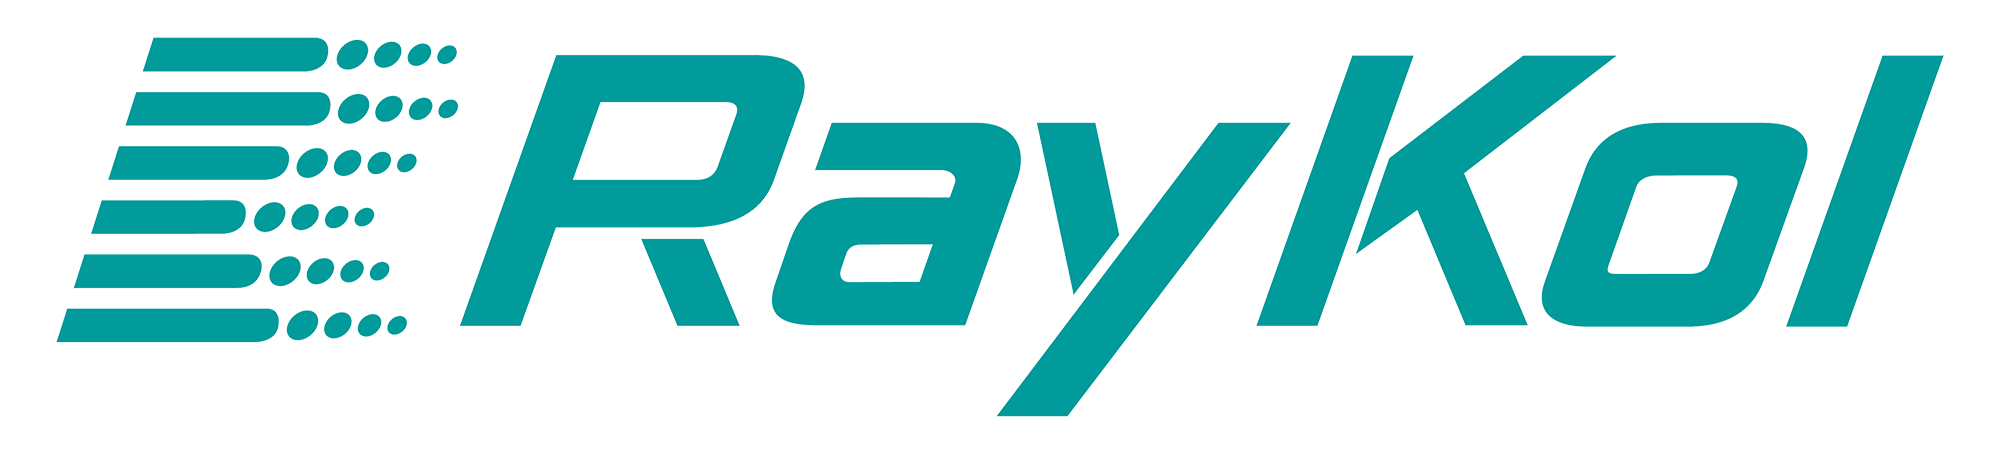 Raykol Group logo